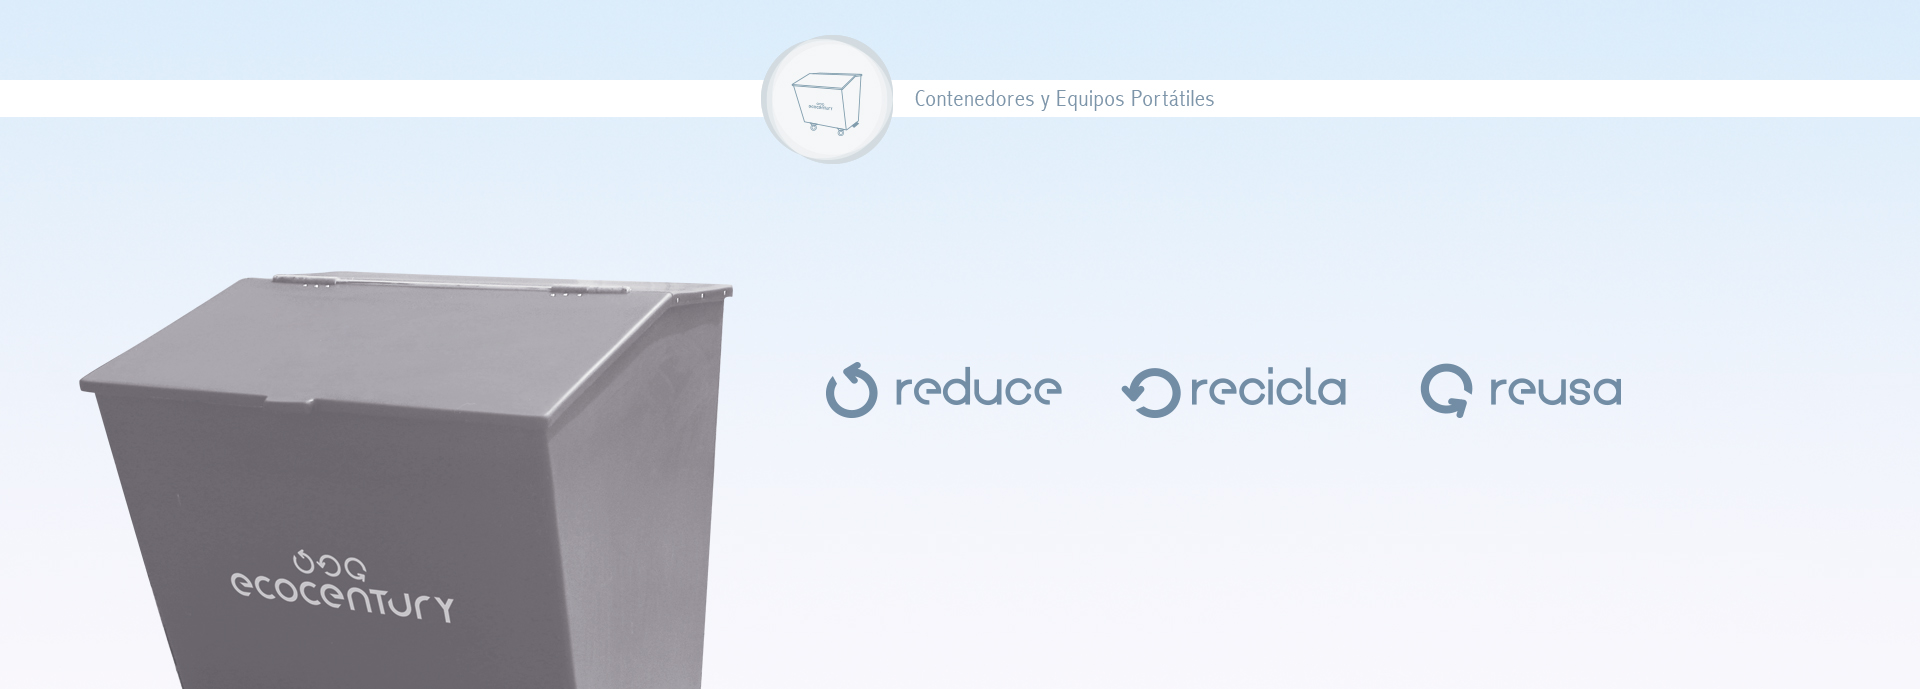 contenedores portatiles: reduce, recicla, reusa